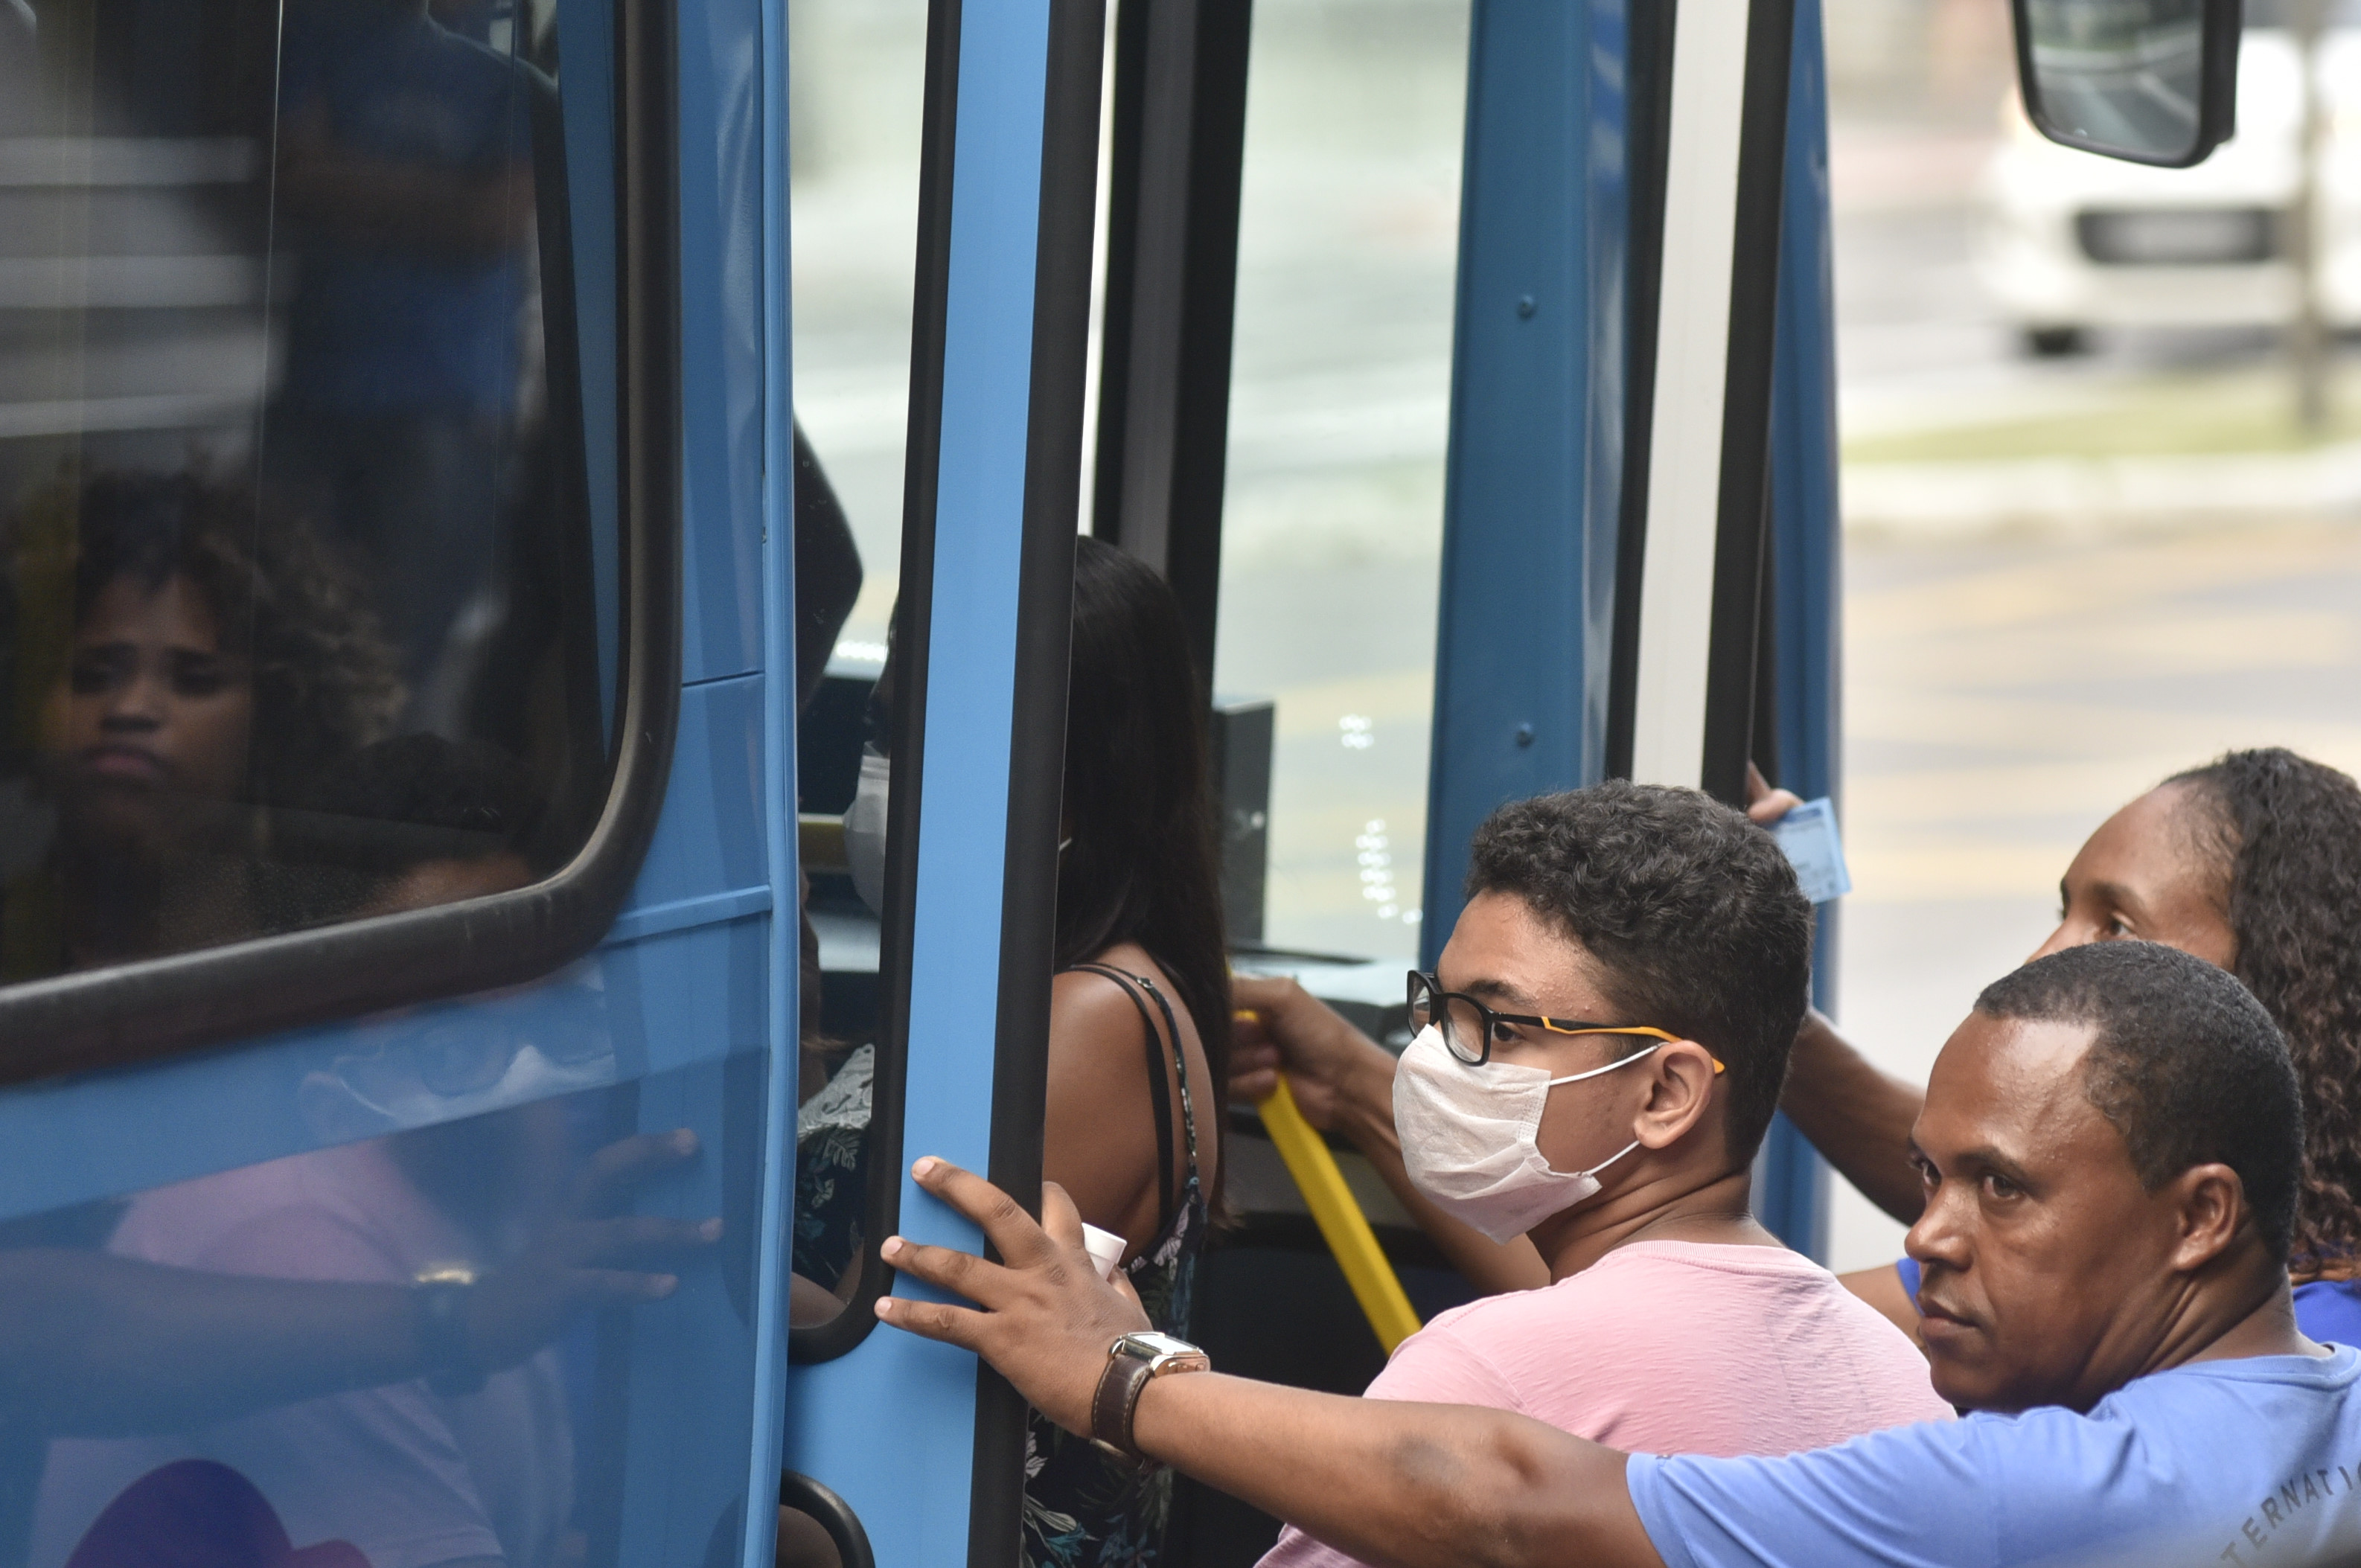 Data: 17/03/2020 - ES - Vitória - Após pandemia de coronavírus pedestre usa máscara na avenida Reta da Penha - Editoria: Cidades - Foto: VItor Jubini - GZ